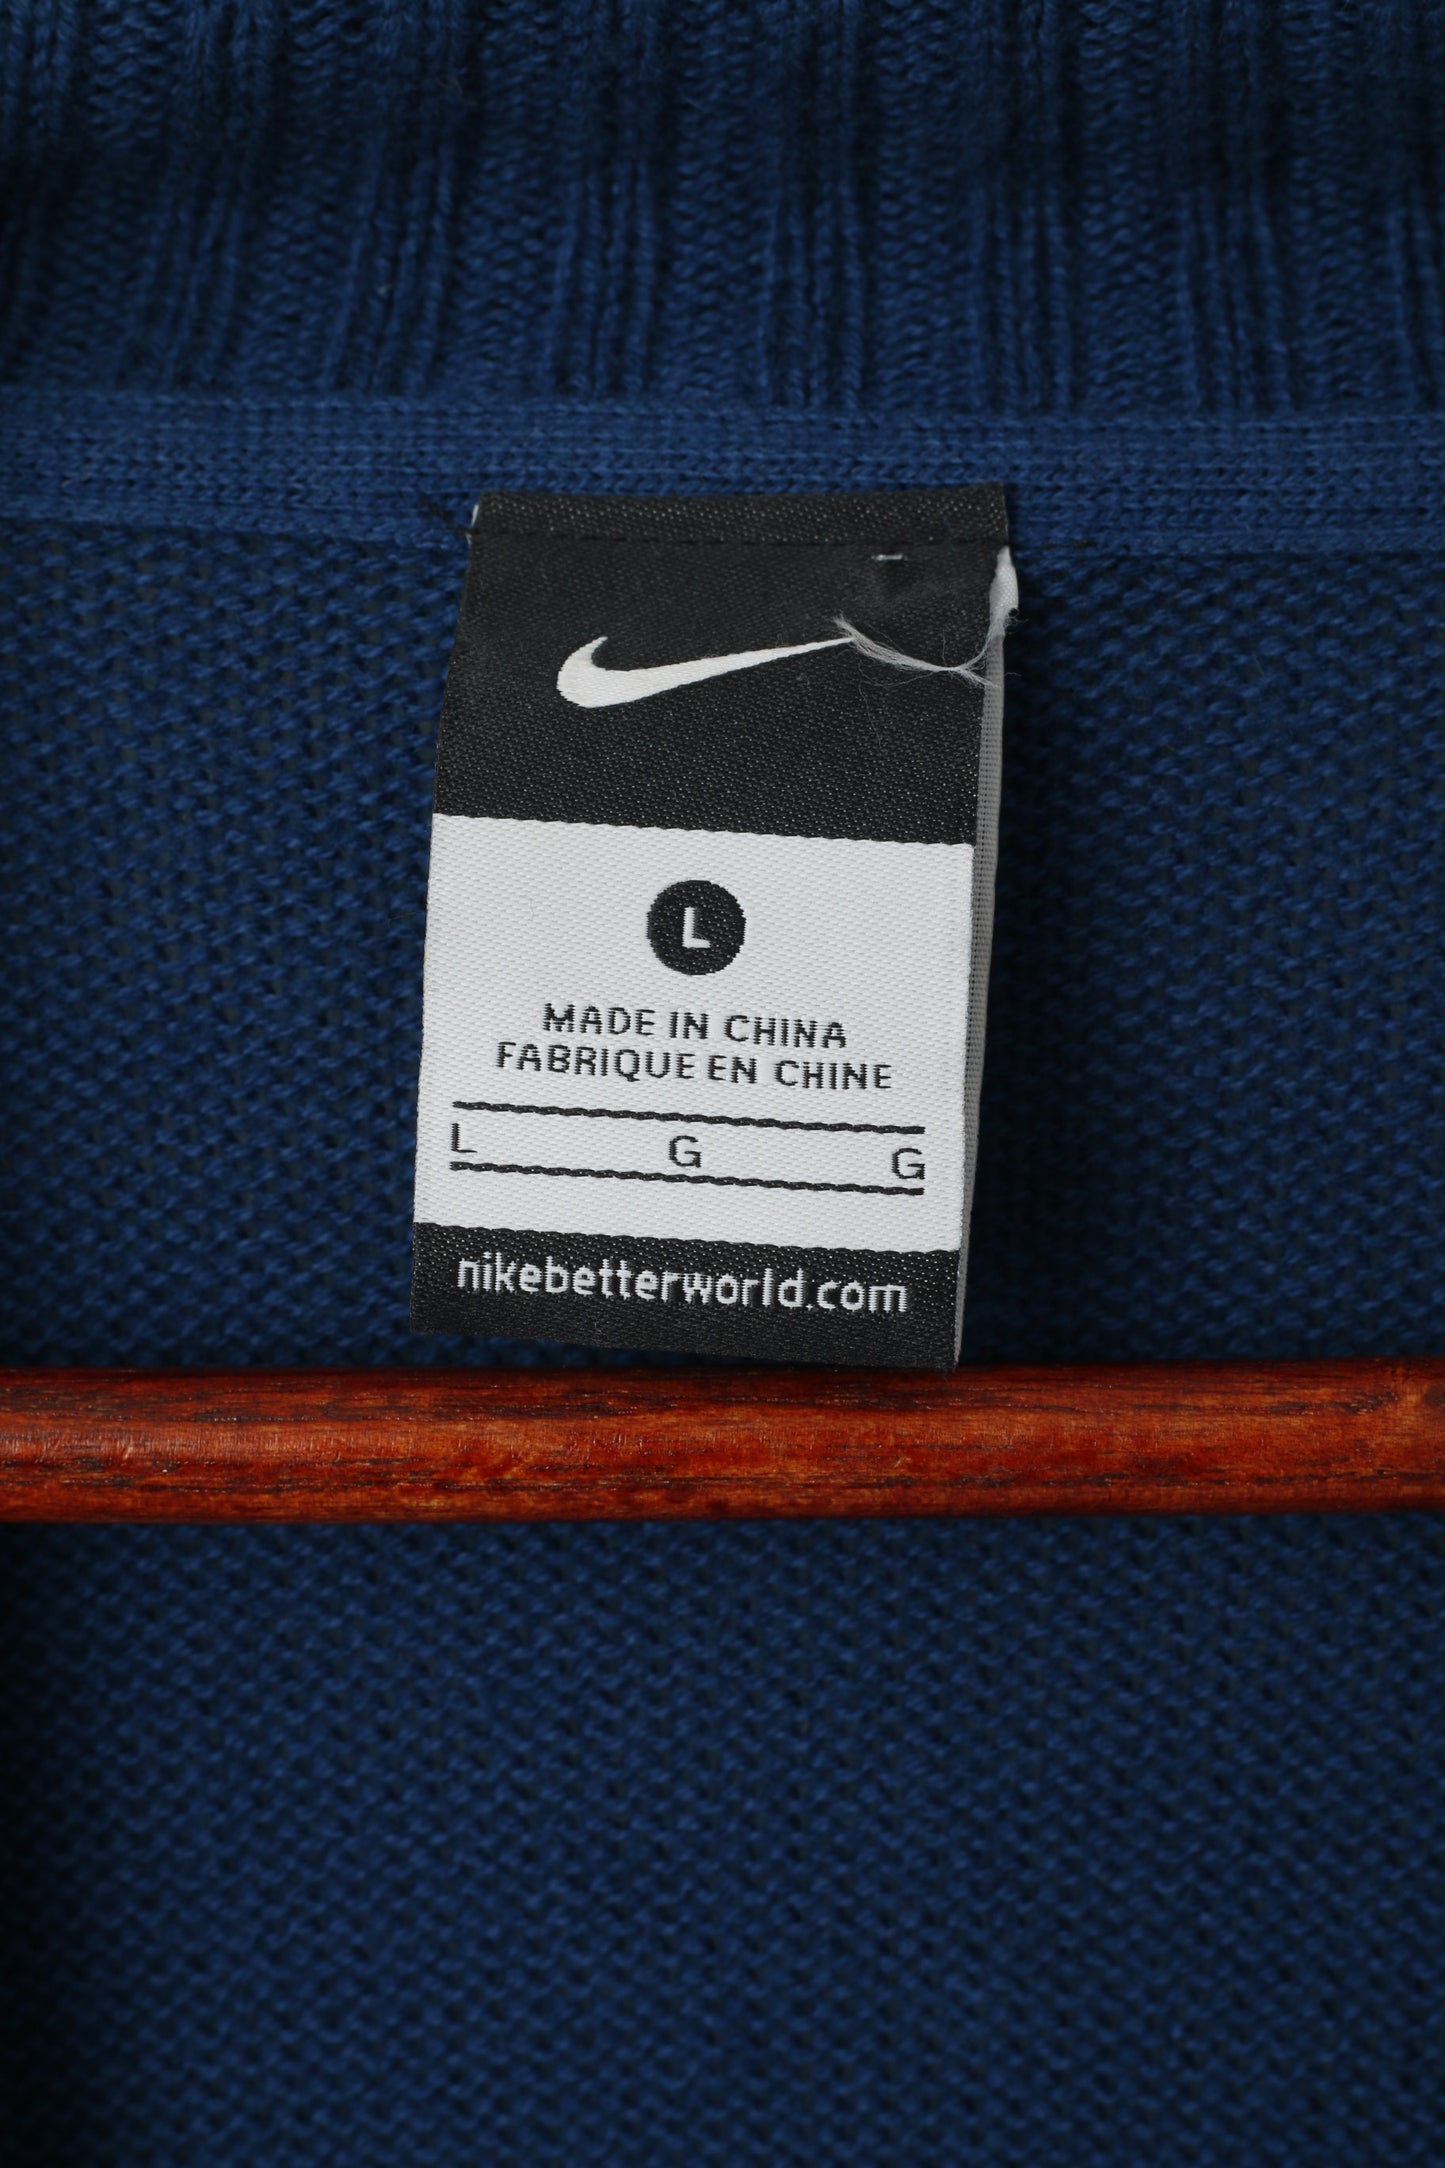 Nike L Pull Bleu Marine Long Stretch Coton Laine Mélange Zip Up Cardigan